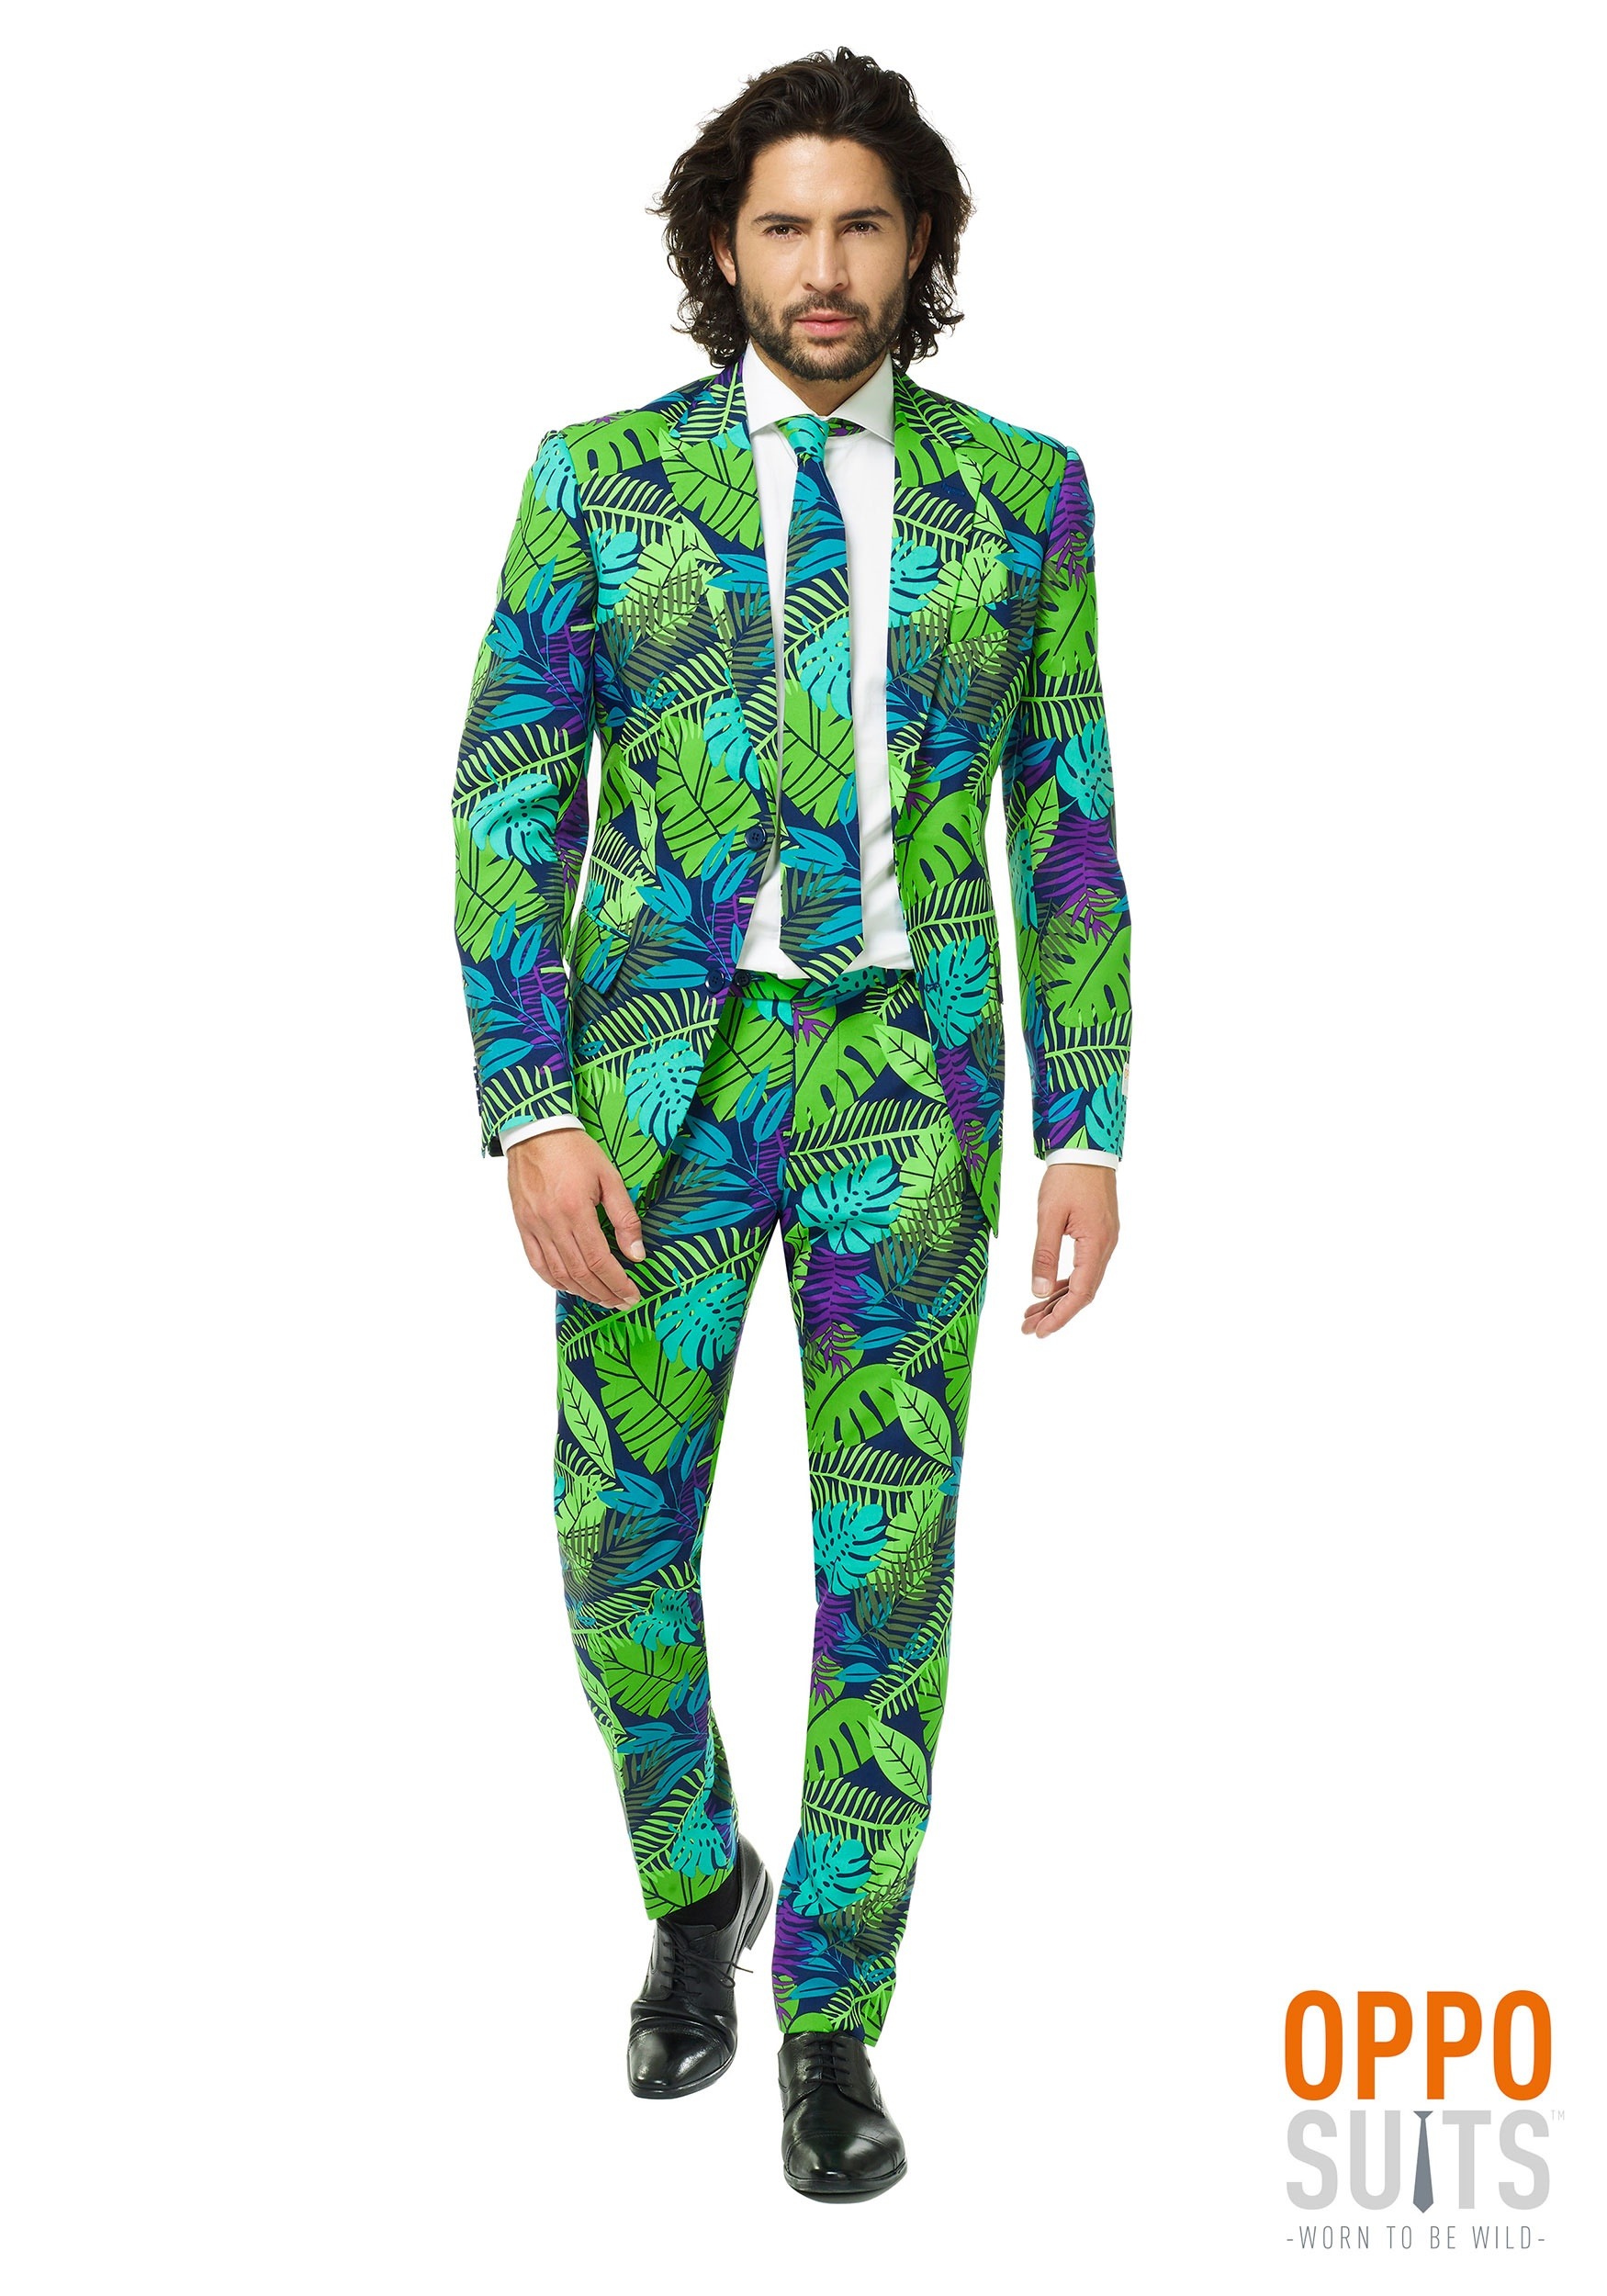 Men's Opposuits Juicy Jungle Suit Costume